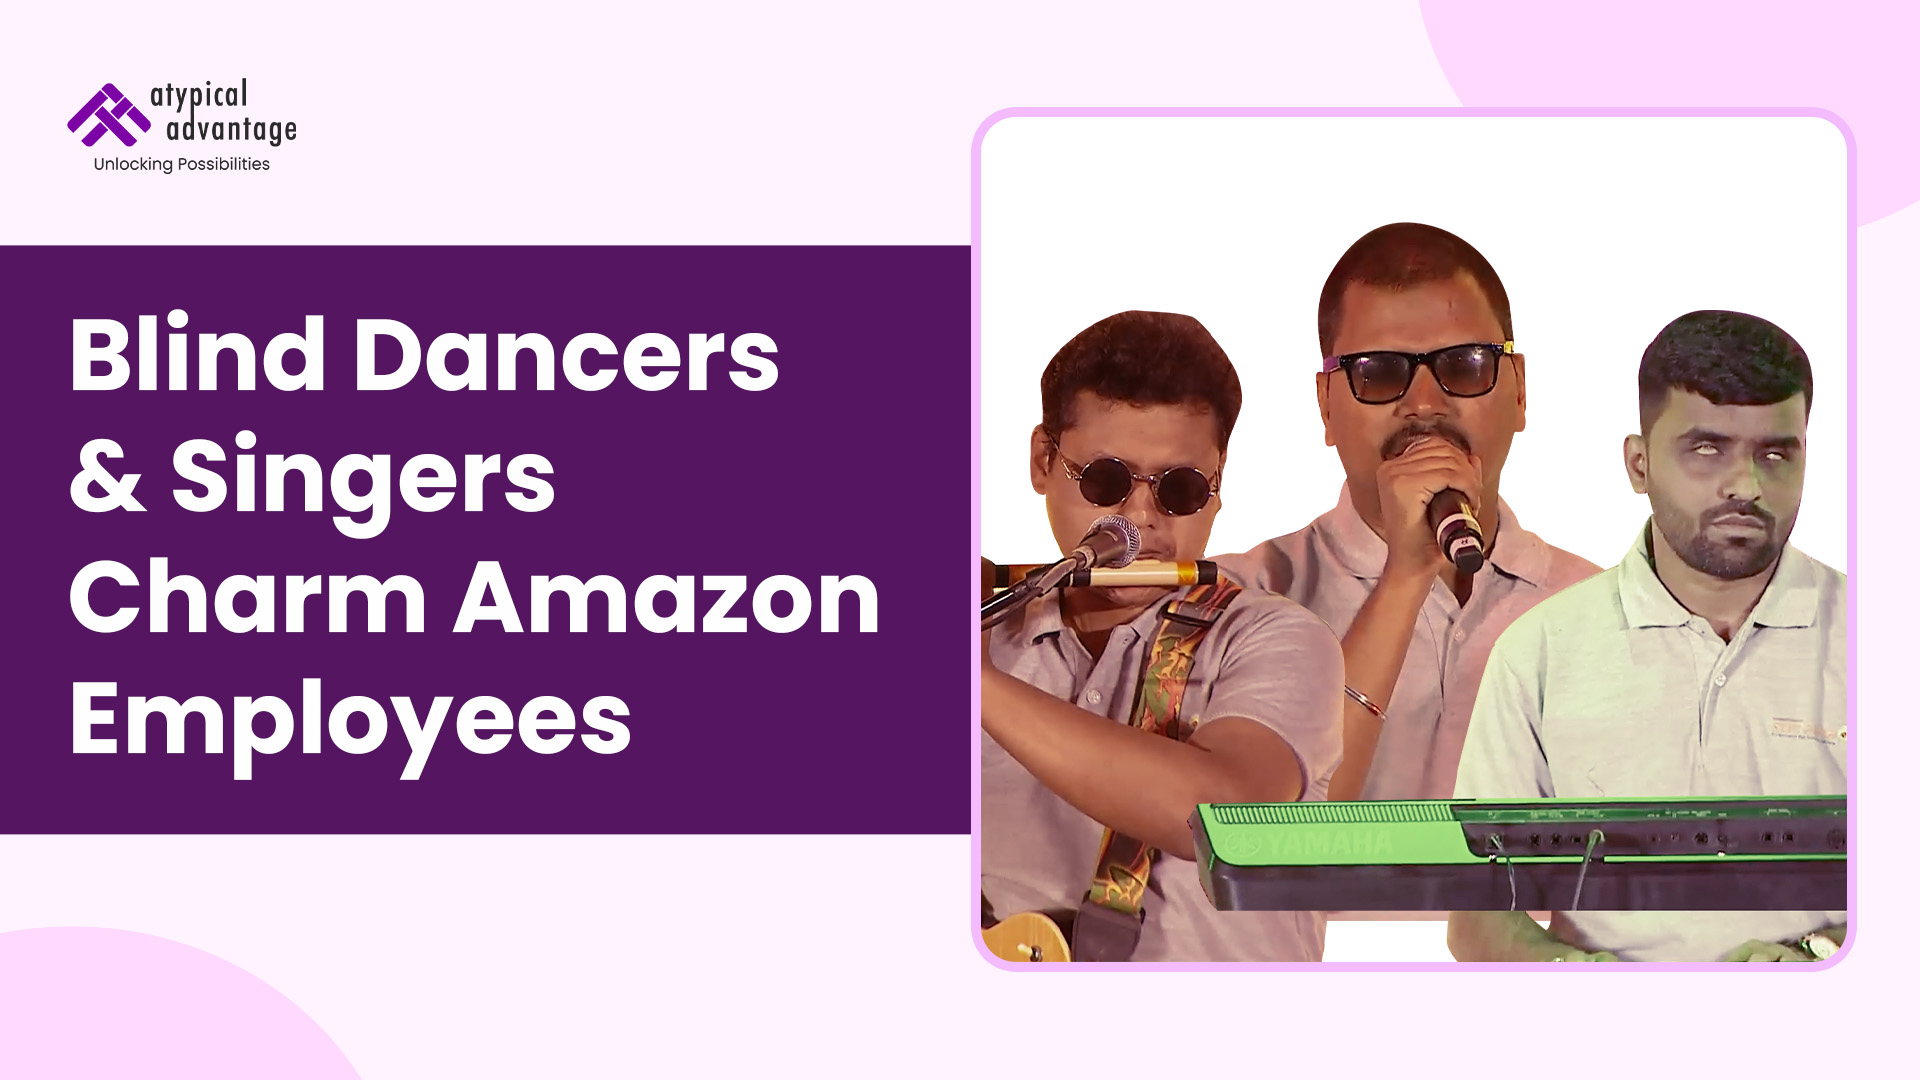 Blind musicians Charm Amazon Employees